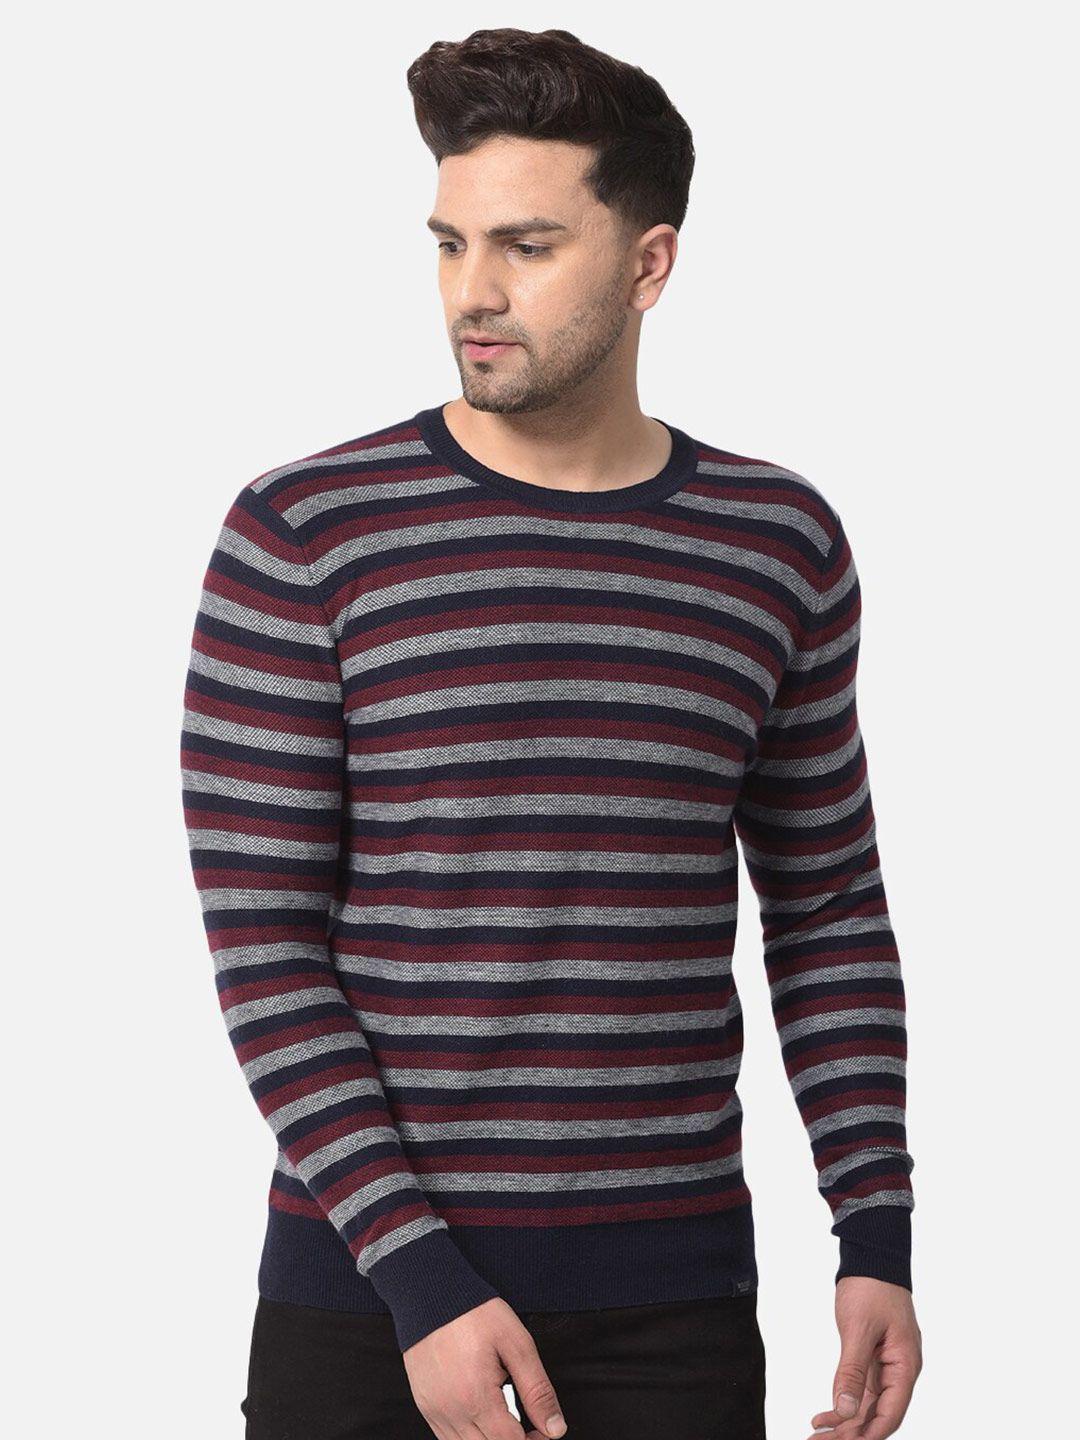 woods men navy blue striped sweater